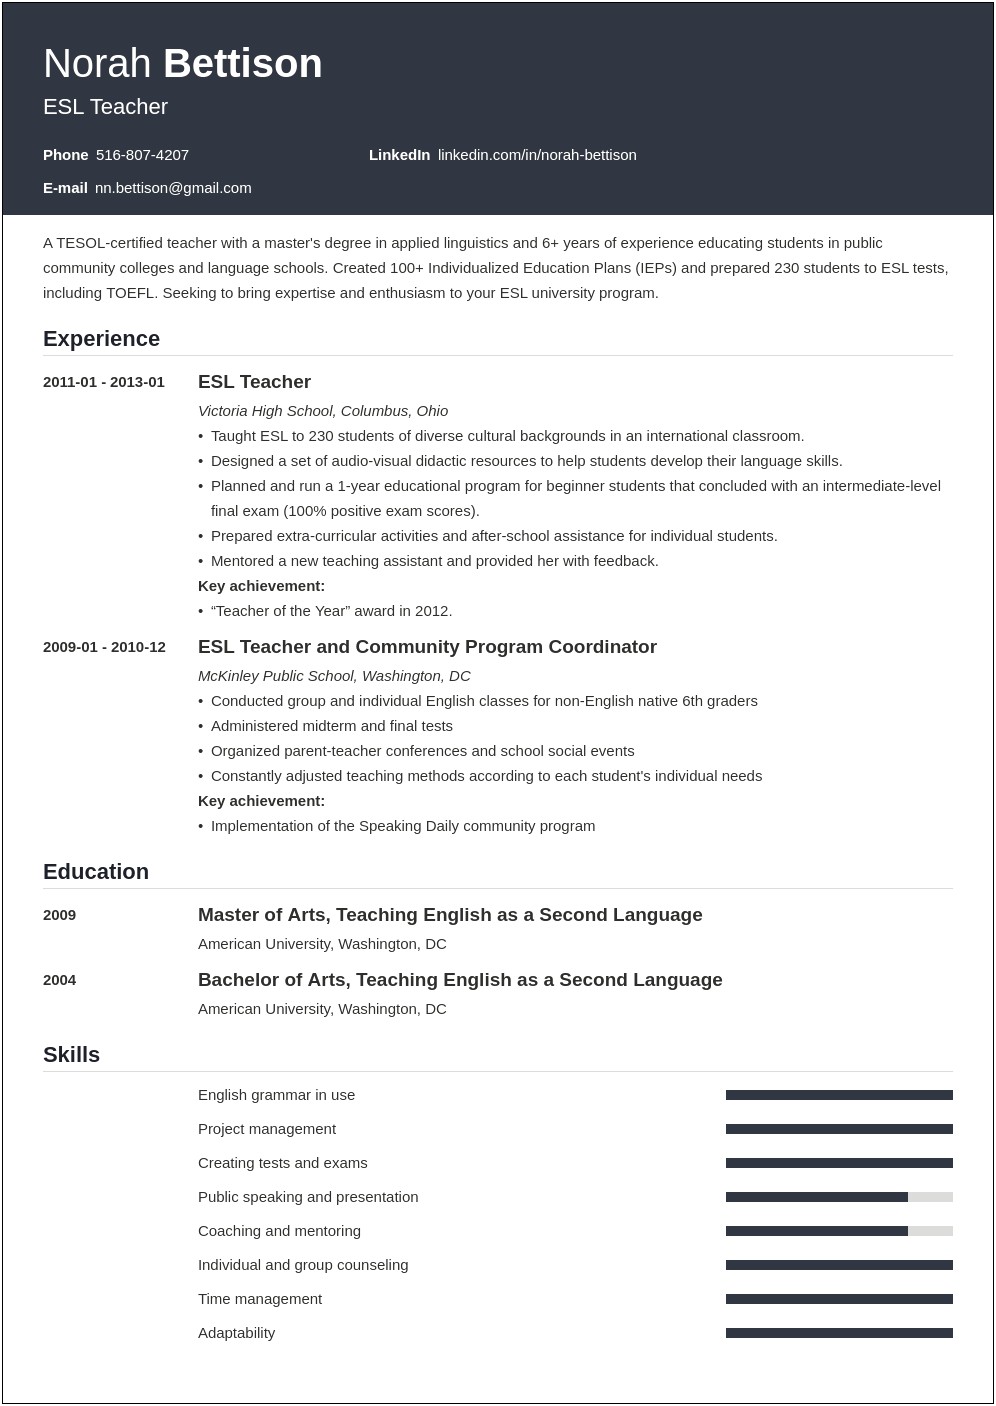 Resume Non Academic Jobs Linguistics